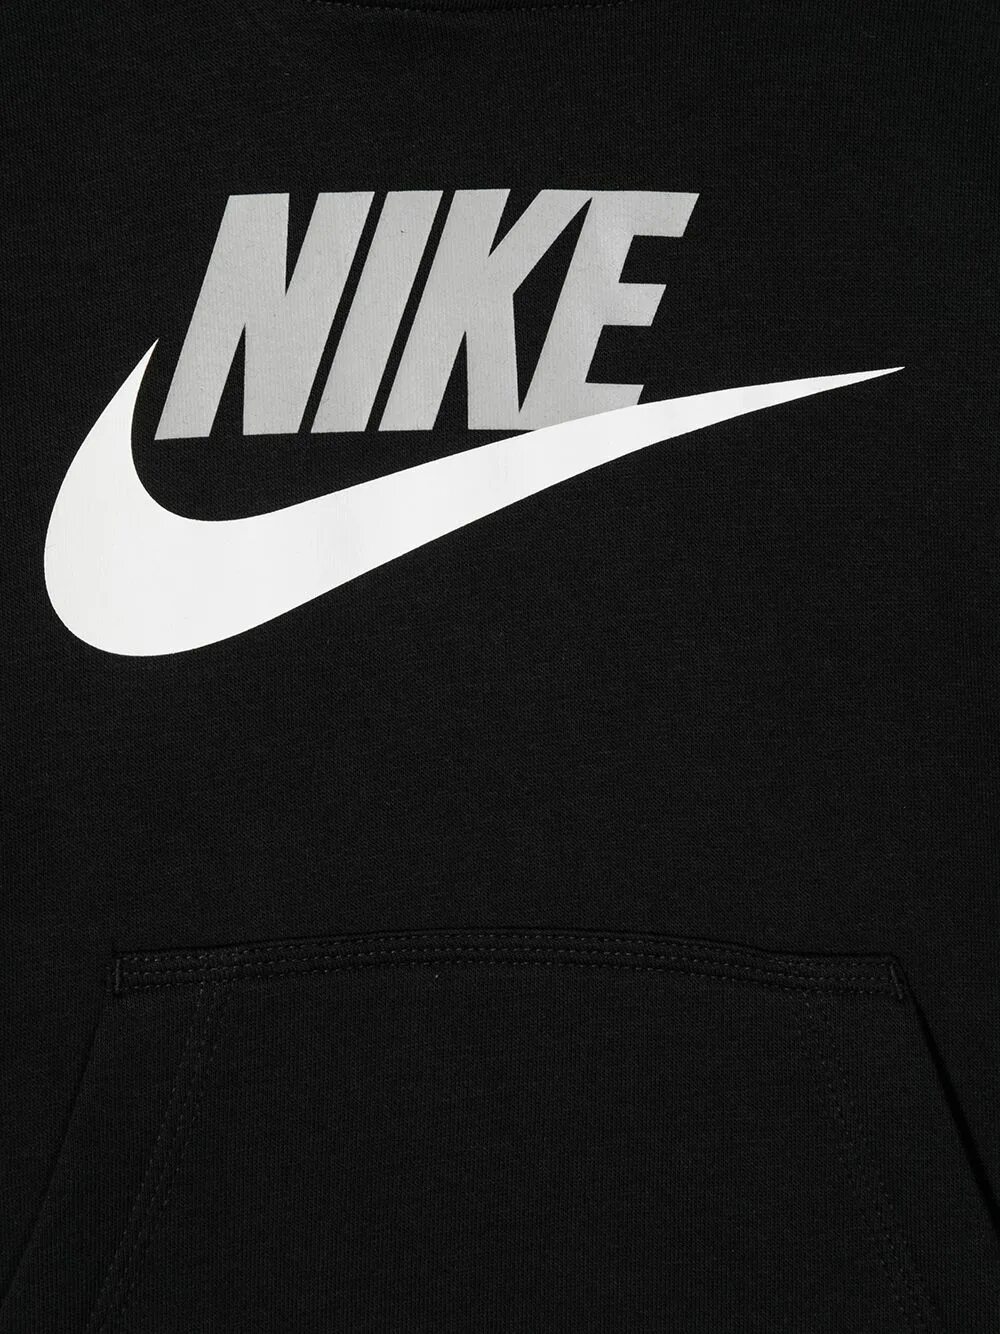 Найк. Nike знак. Бренд найк логотип. Nike логотип на магазине. Что означает найк